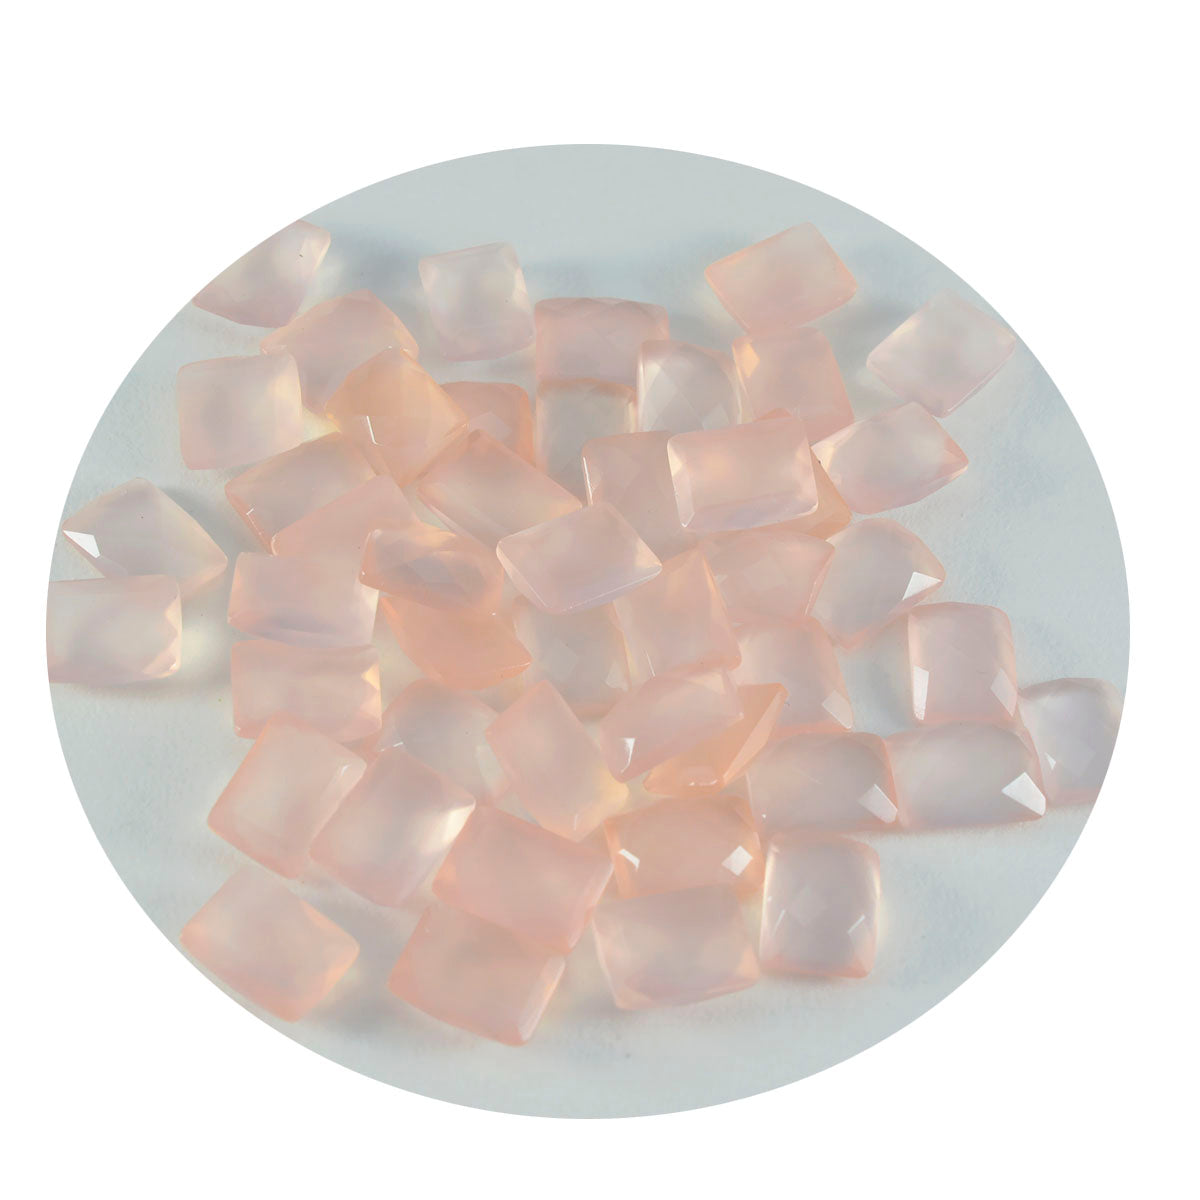 Riyogems 1PC roze rozenkwarts gefacetteerd 3x5 mm achthoekige vorm prachtige kwaliteitsedelsteen